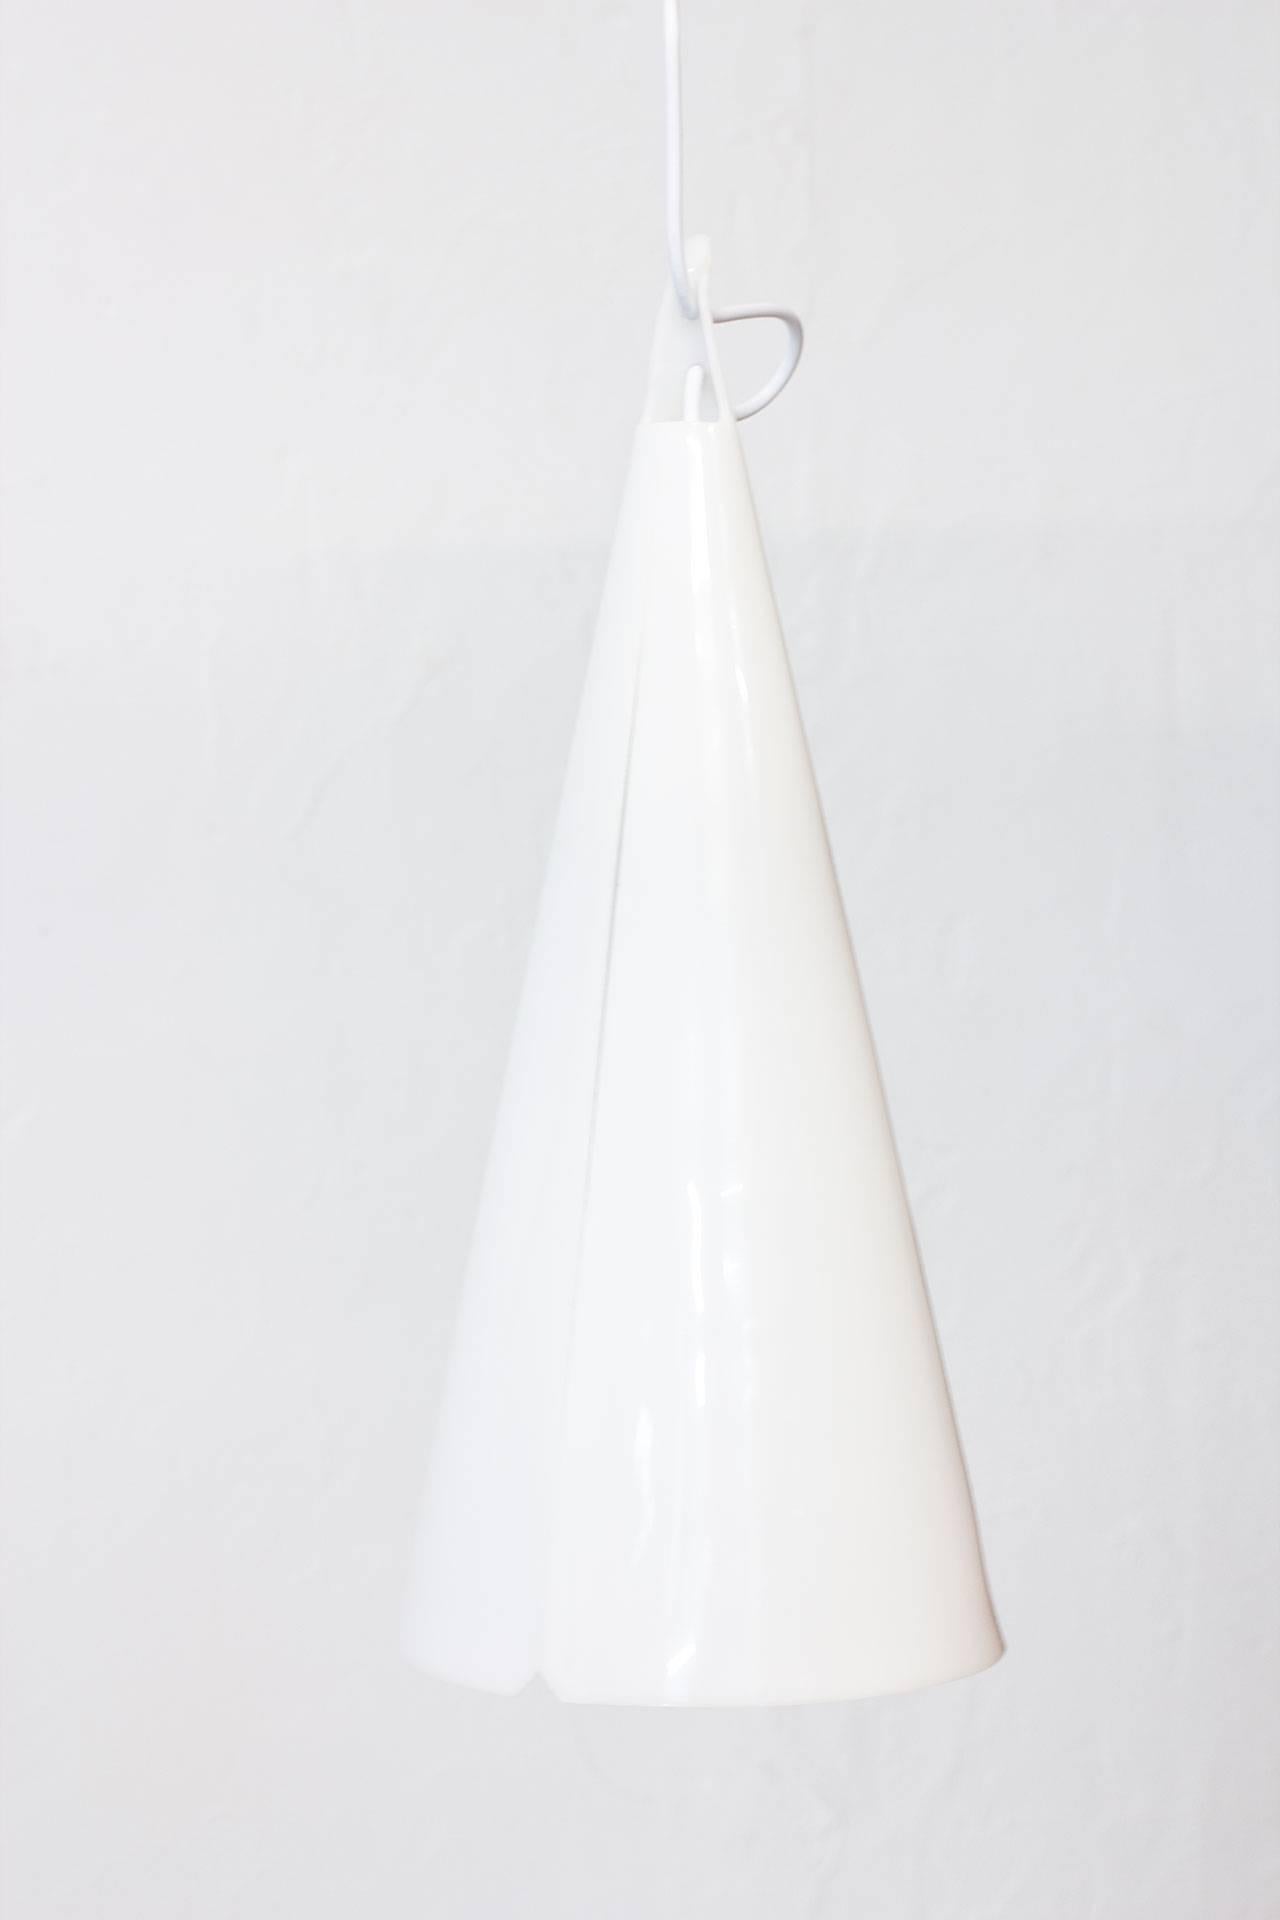 Scandinavian Modern Hans Bergström Acrylic Lamp Model Struten Produced by Ateljé Lyktan, Sweden